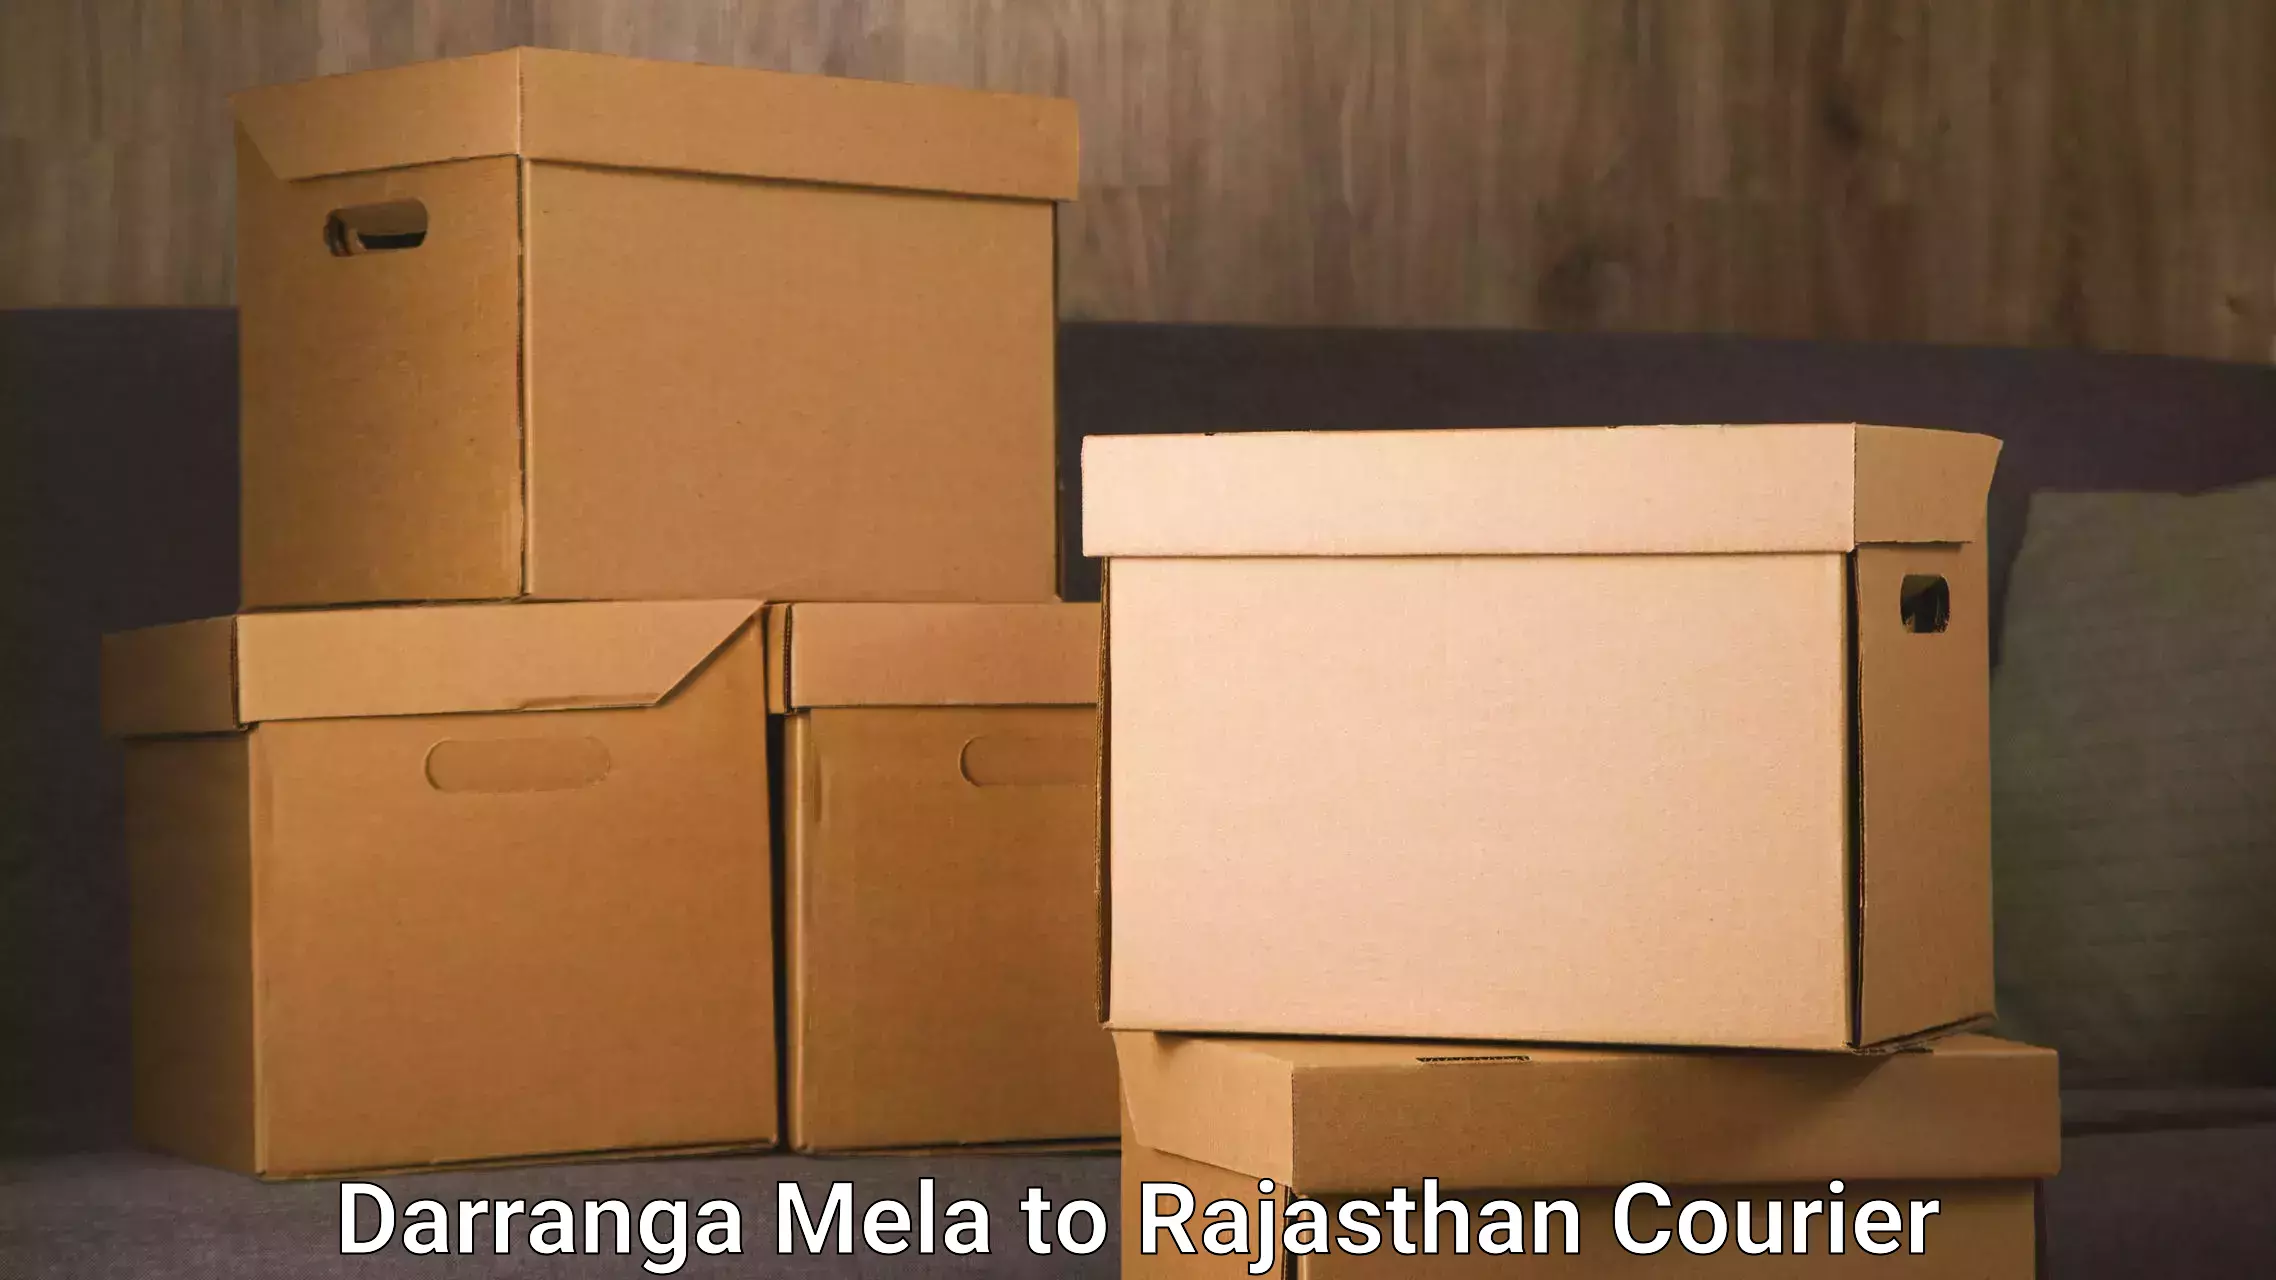 Tracking updates in Darranga Mela to Mathania